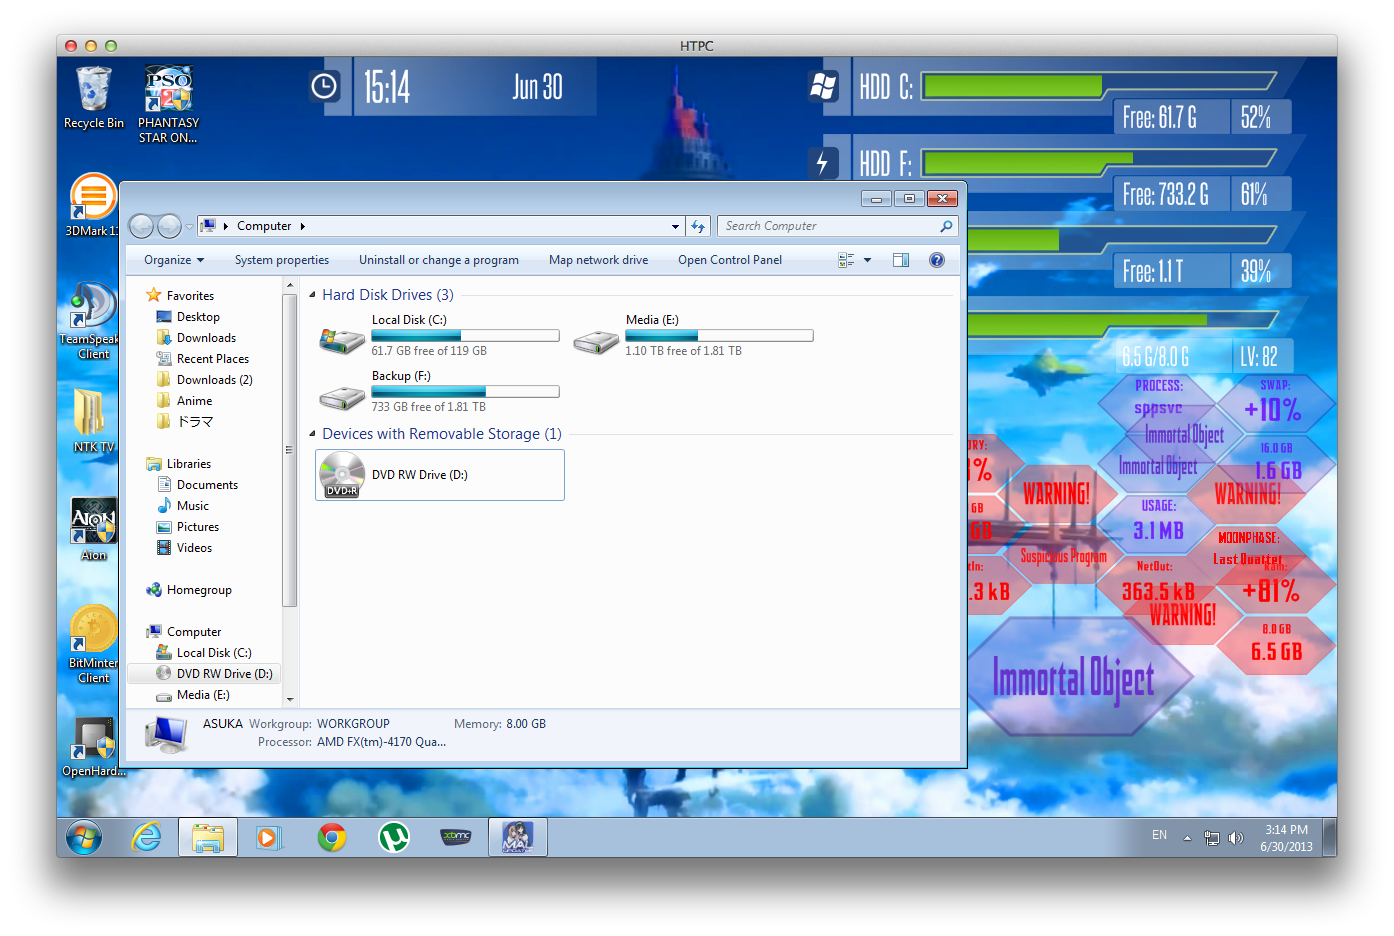 Microsoft windows 7 cd/dvd-to-usb download tool